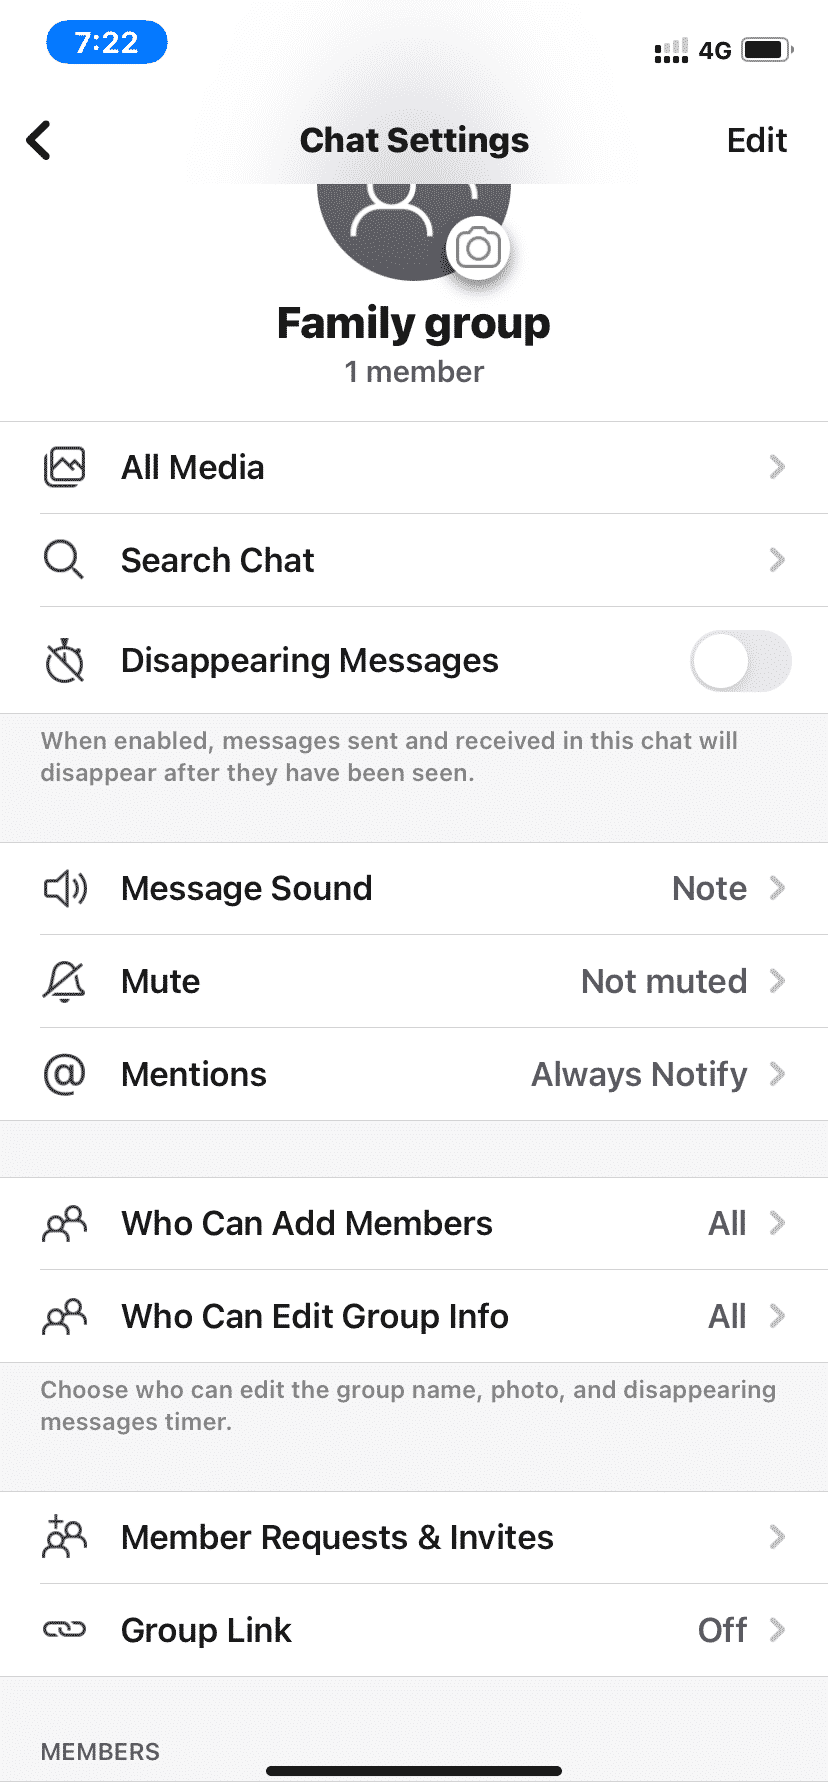 Option signals whatsapp group